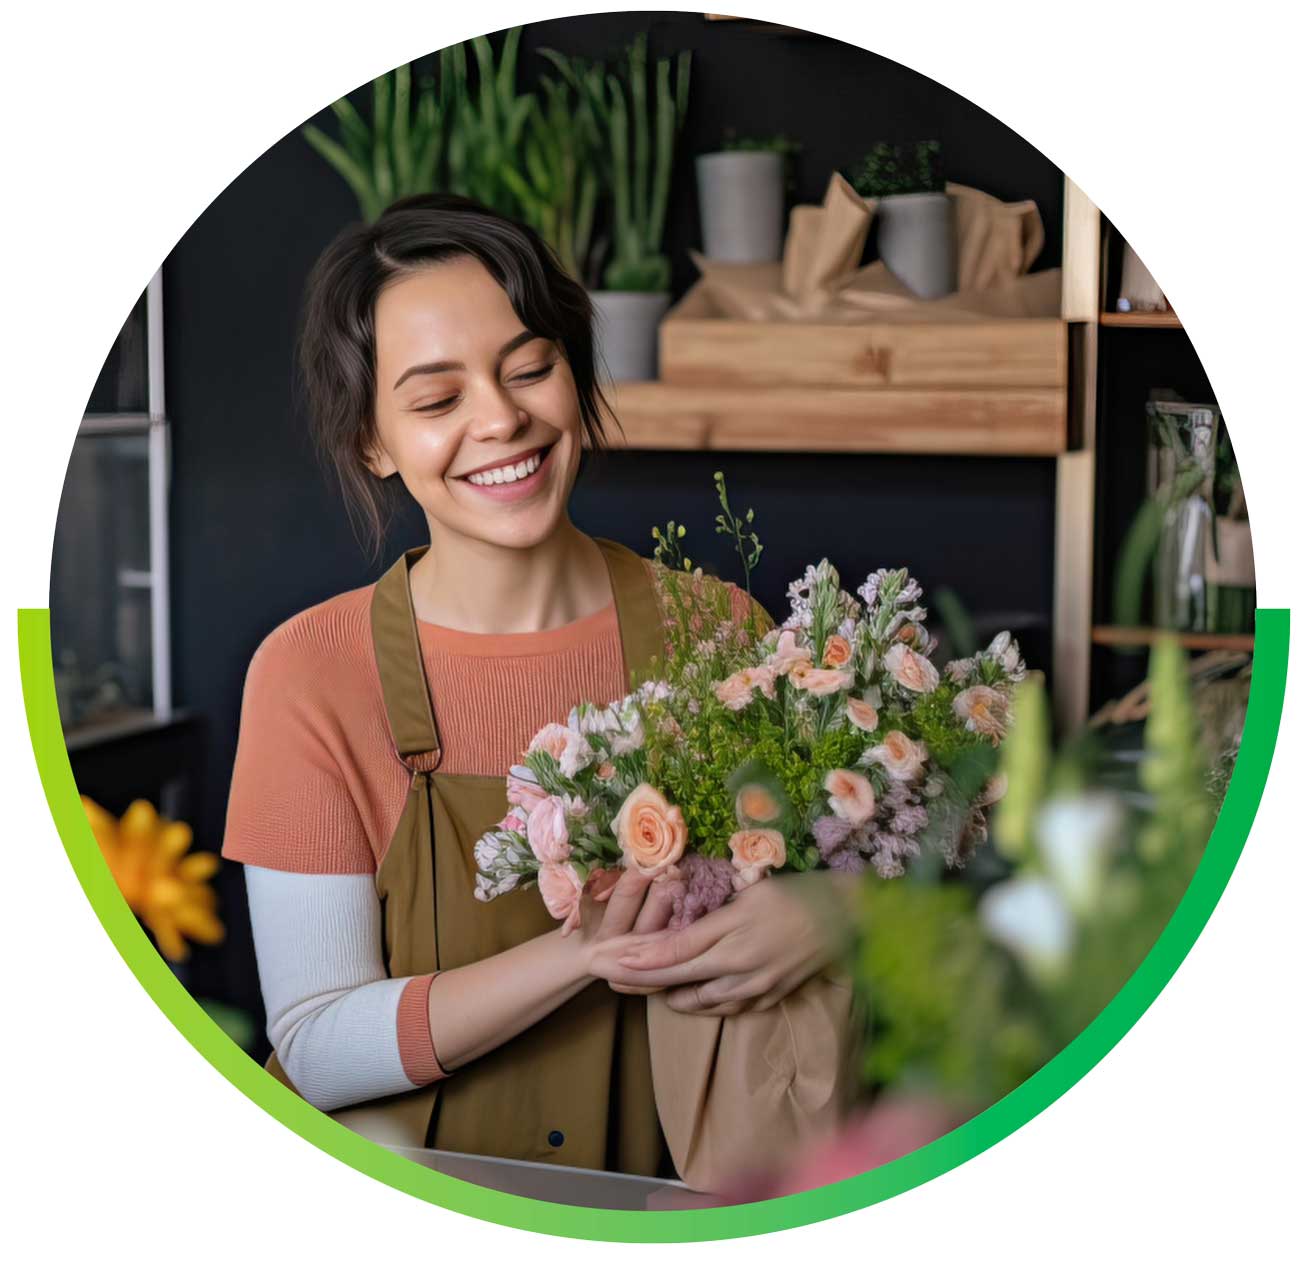 Image of flower shop employee